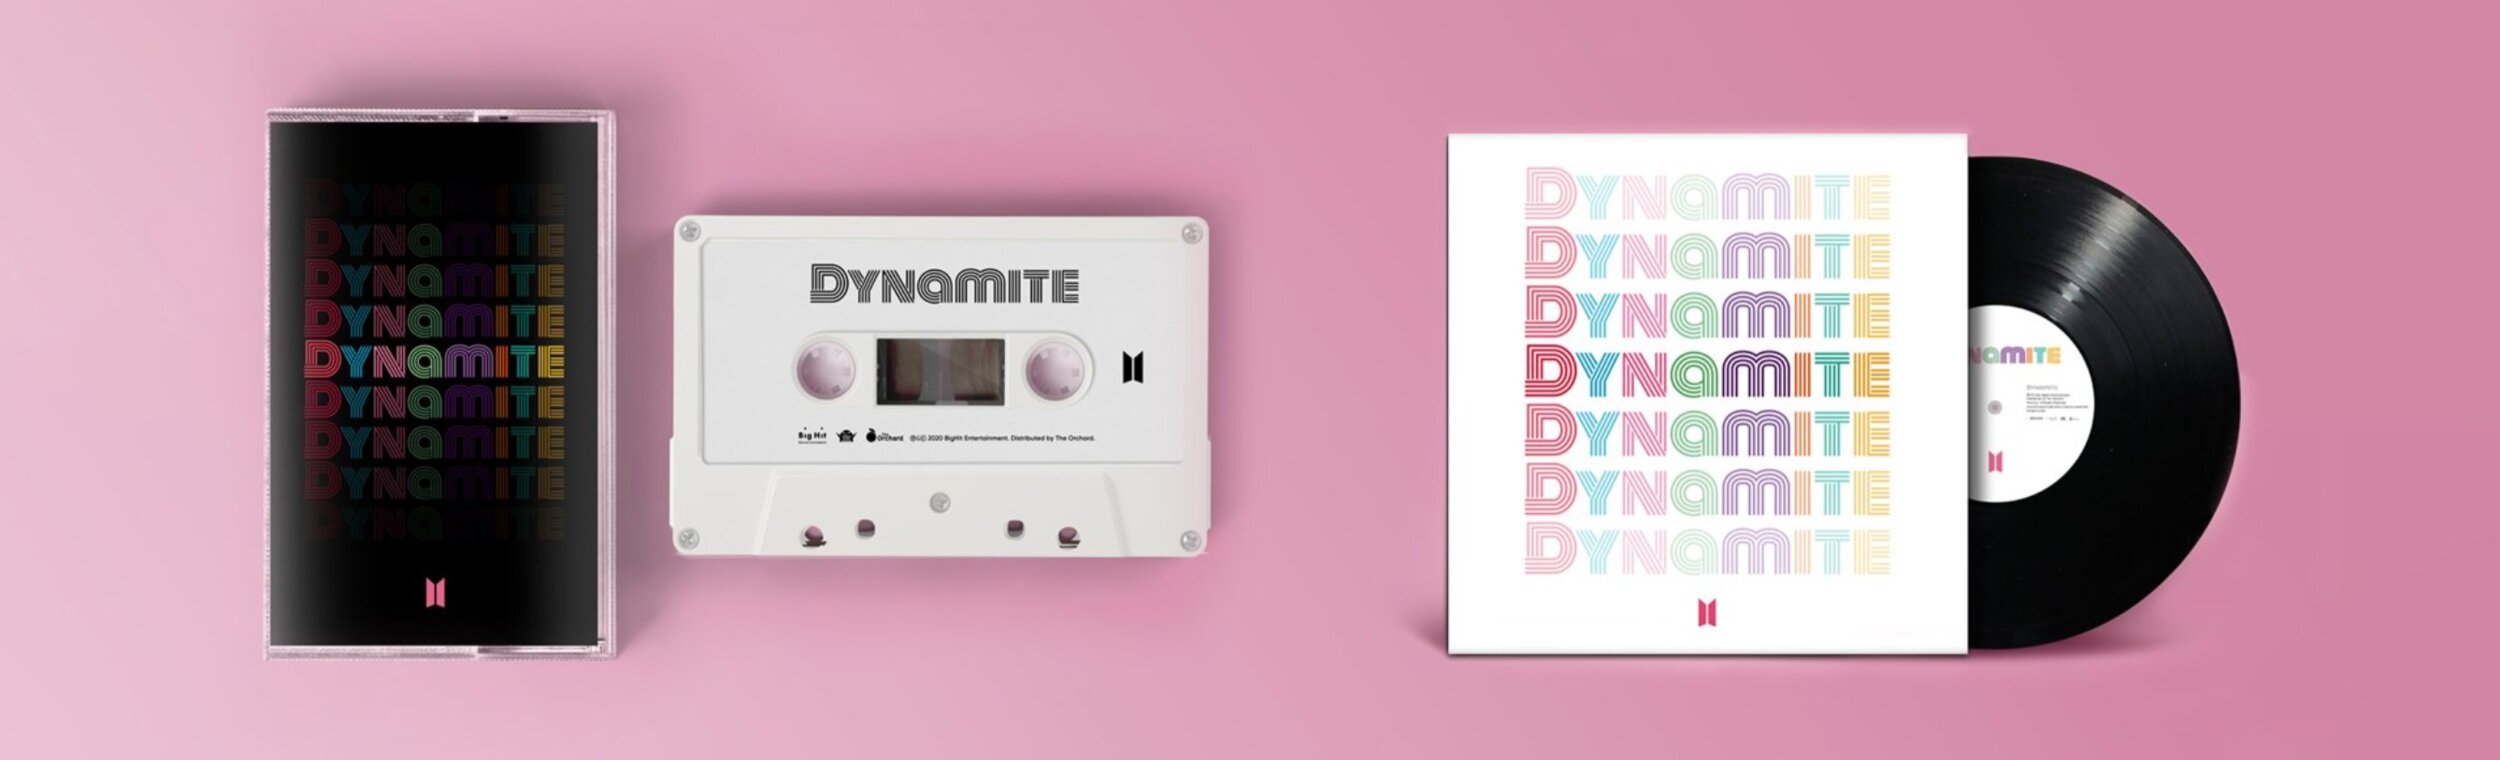 BTS Dynamite - Cassette, Vinyl 